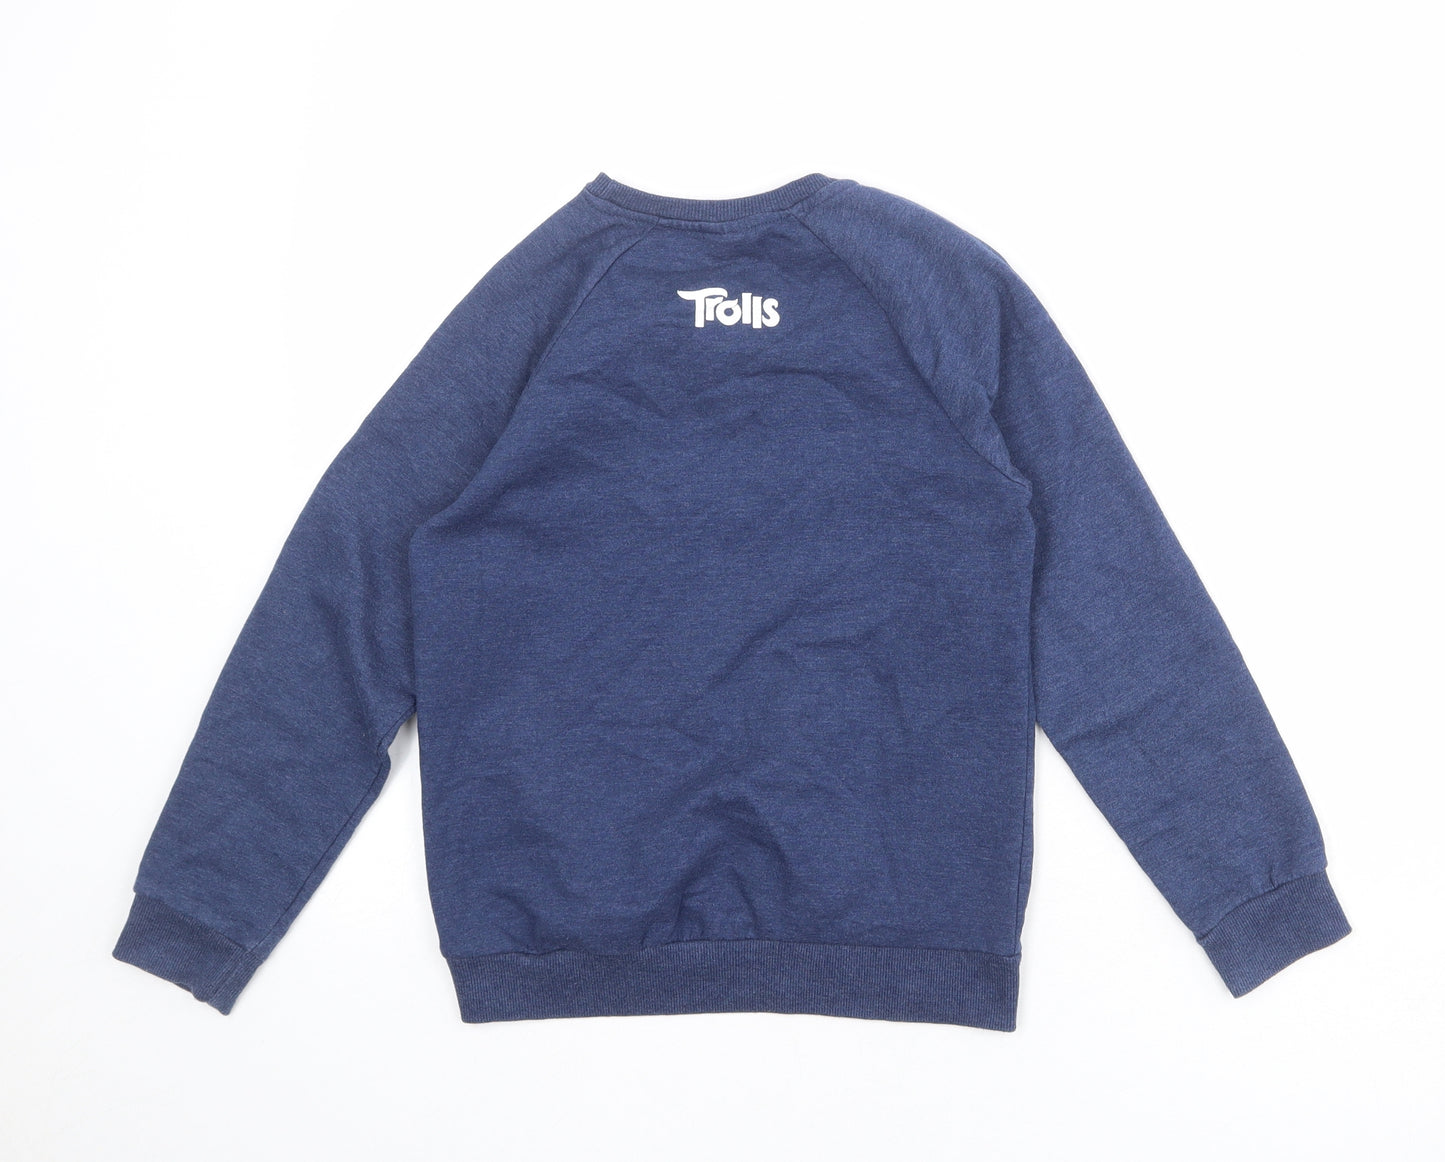 Trolls Girls Blue Cotton Pullover Sweatshirt Size 9-10 Years Pullover